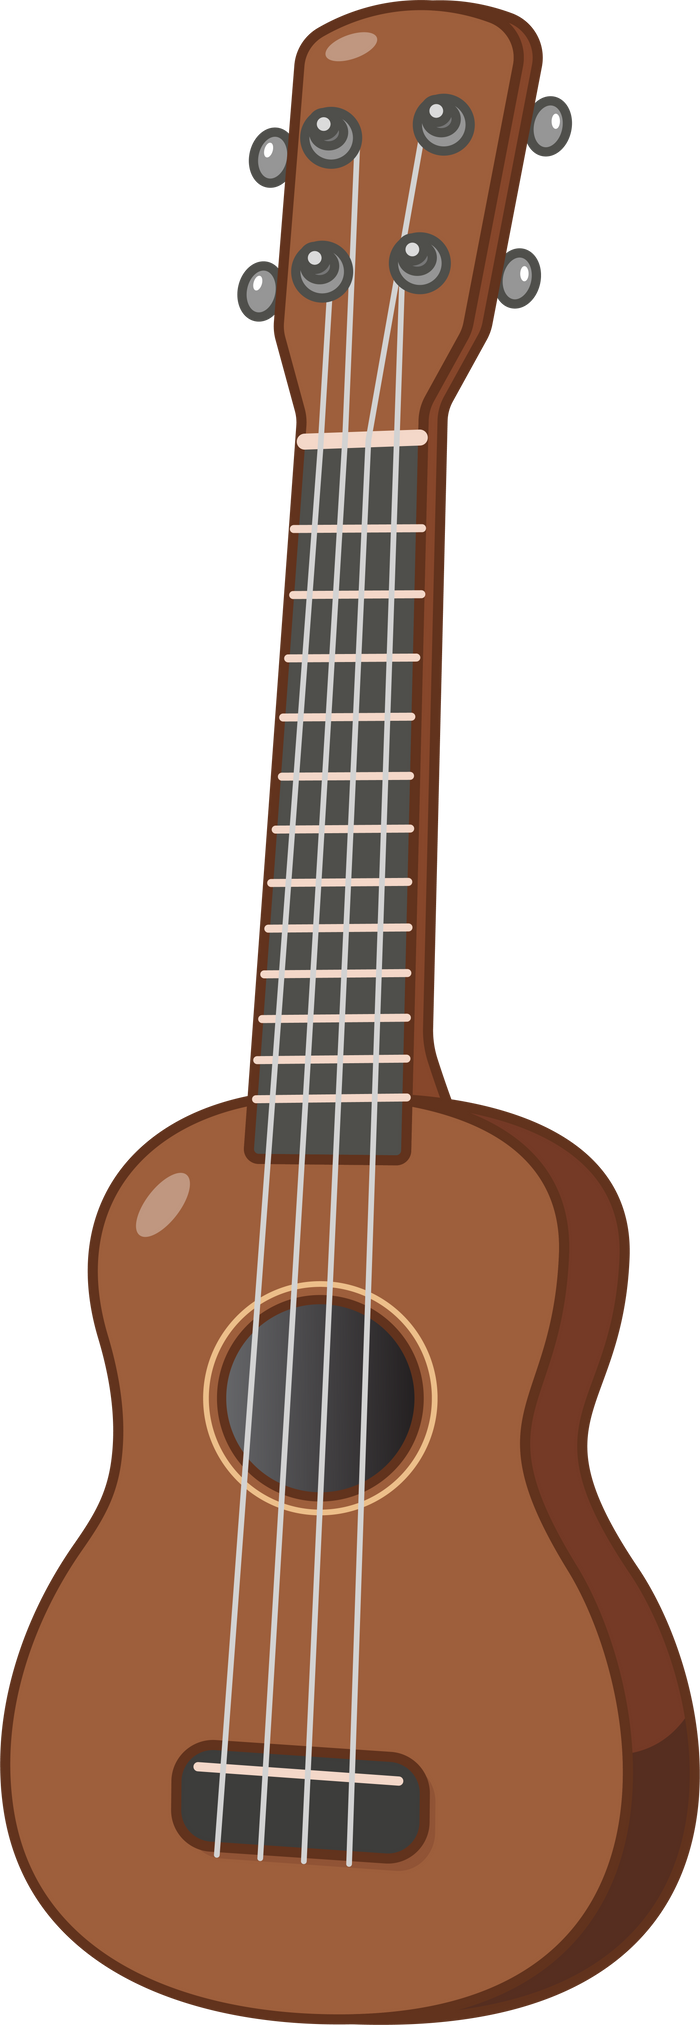 Ukulele Guitar Cartoon